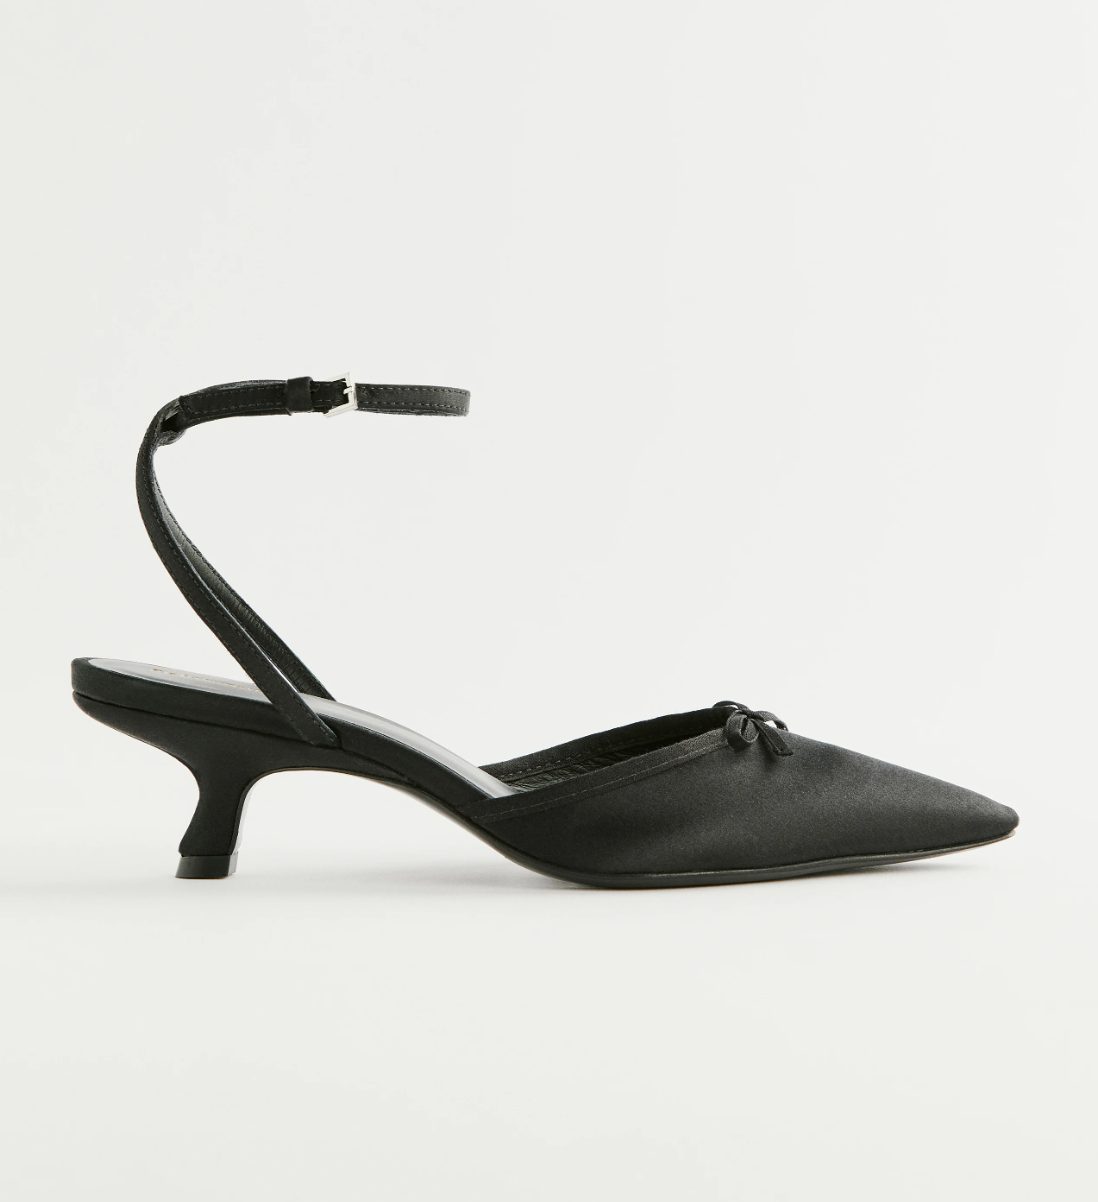 Women's Shoes | Heels, Sandals, Platforms, Boots, & More | Windsor